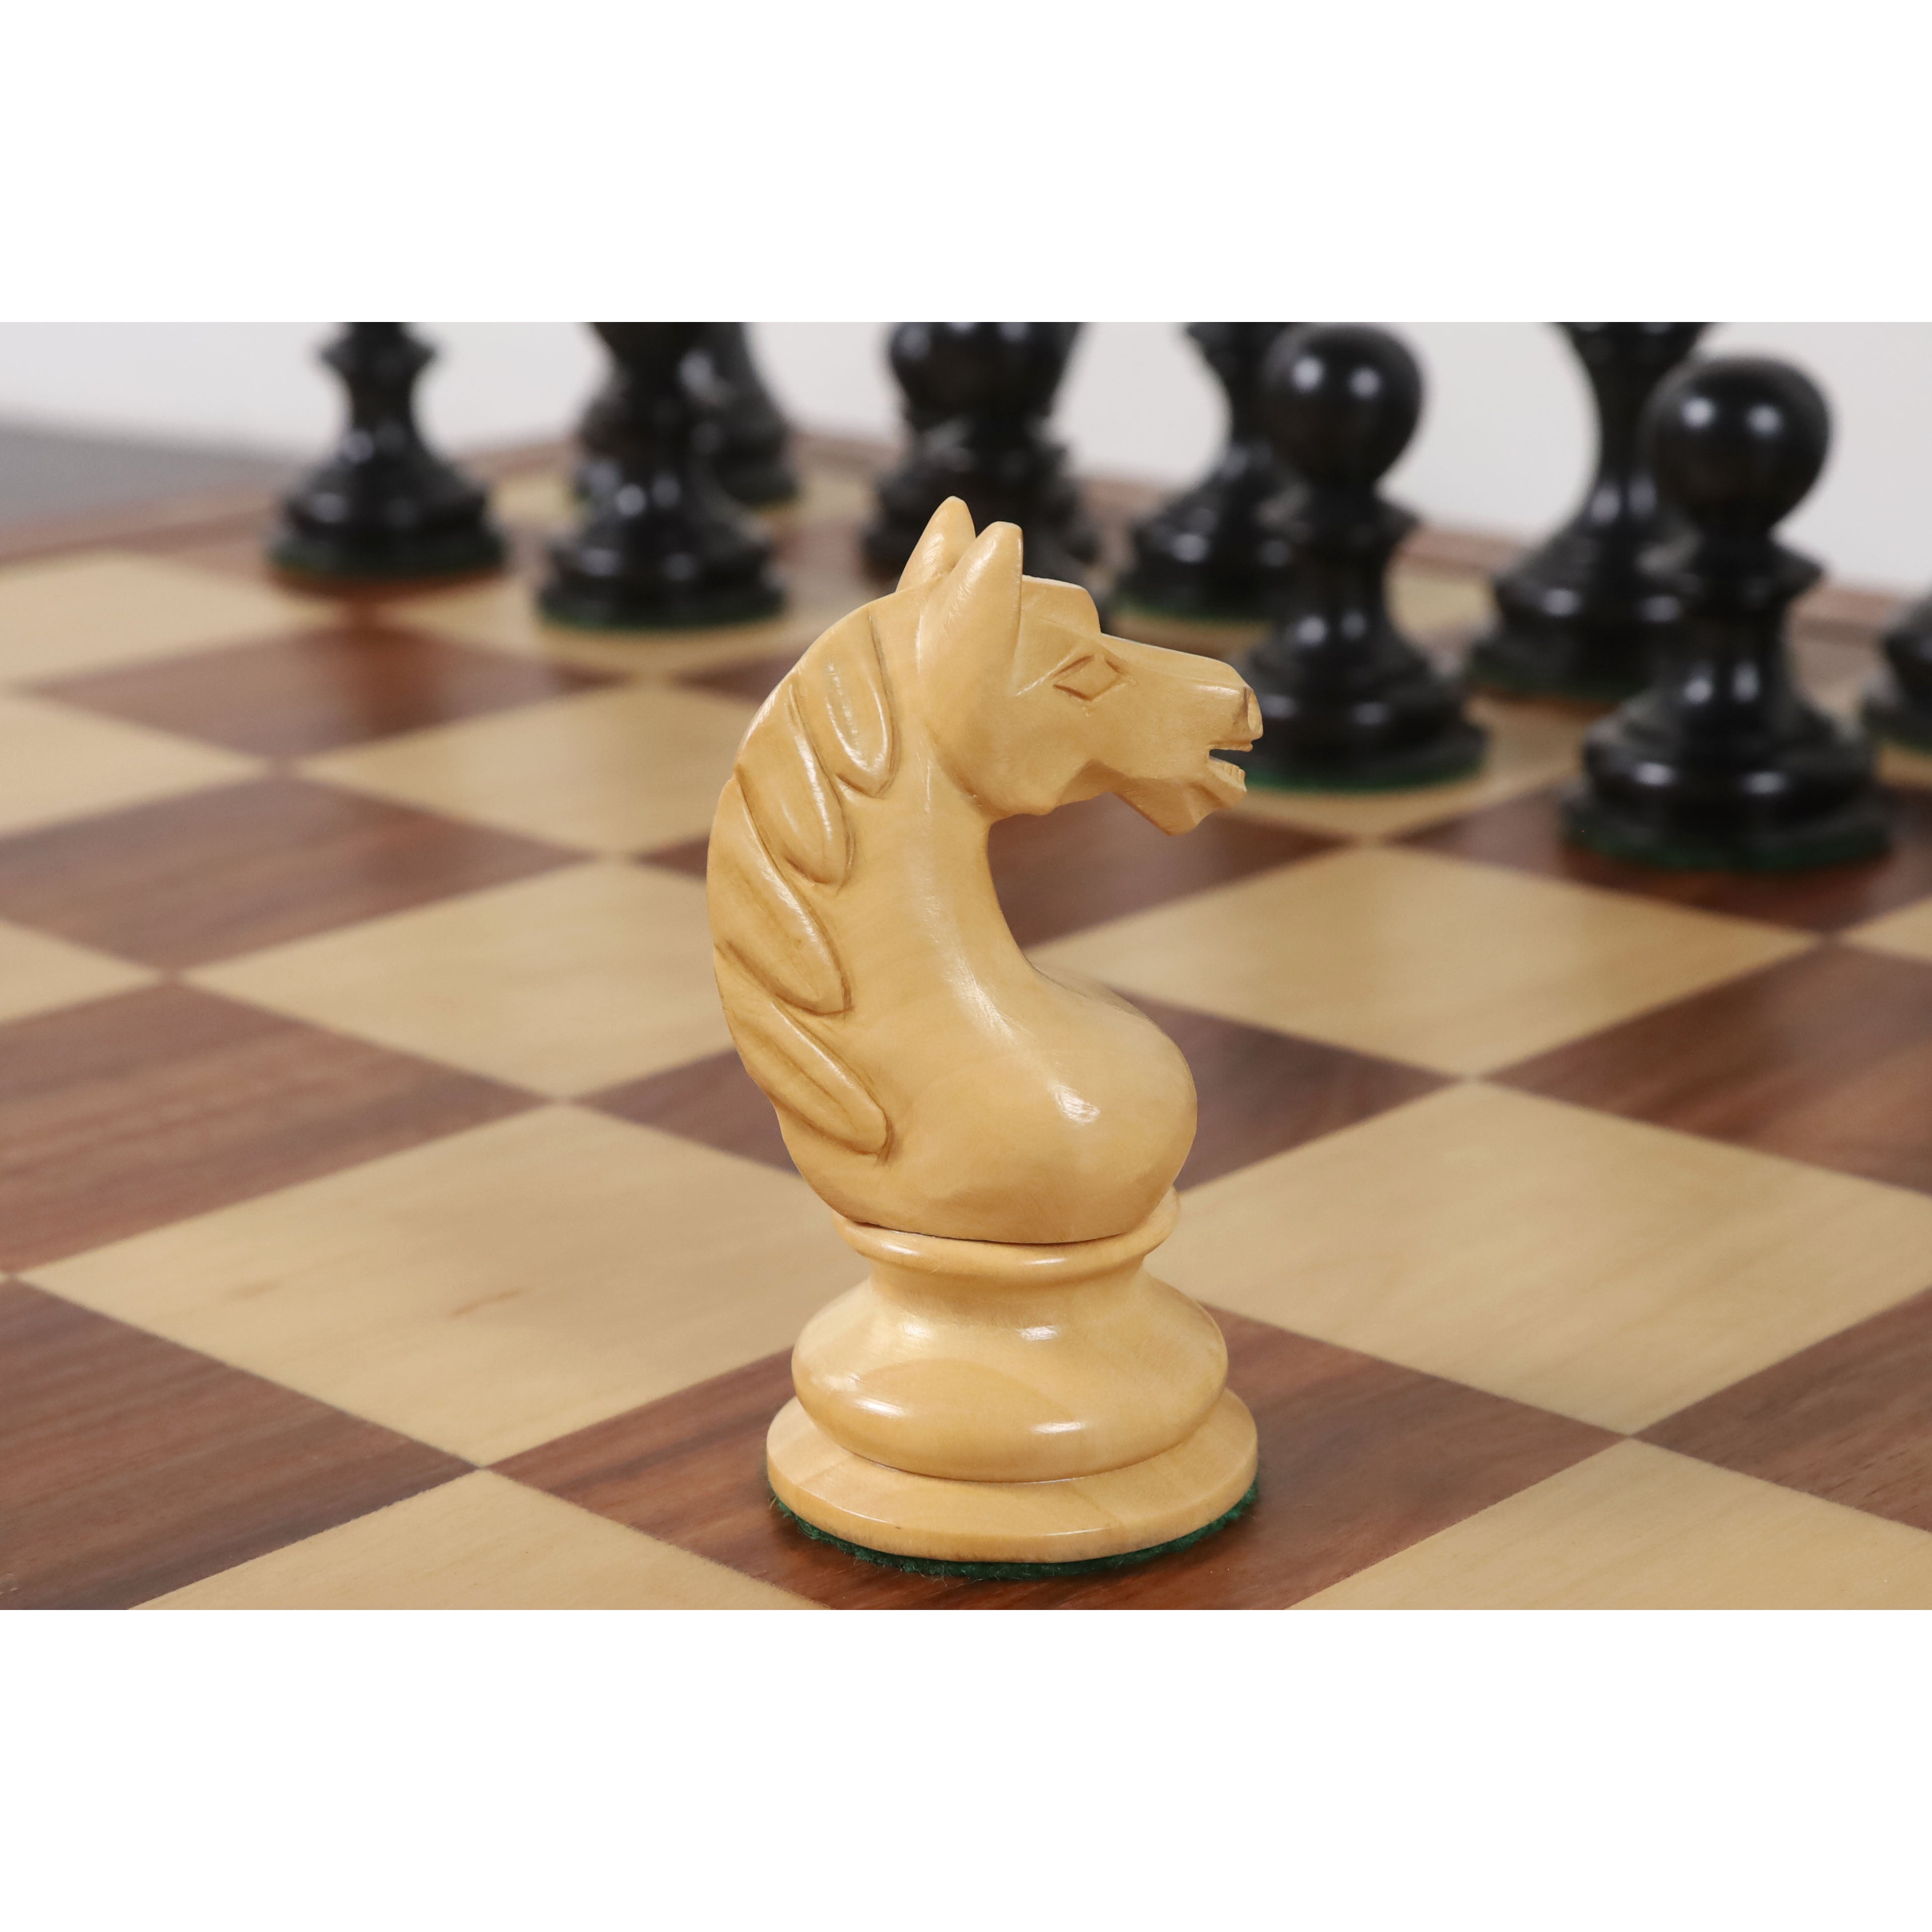 Slightly Imperfect 1933 Botvinnik Flohr-I Soviet Chess Pieces Only Set -Golden Rosewood- 3.6" King